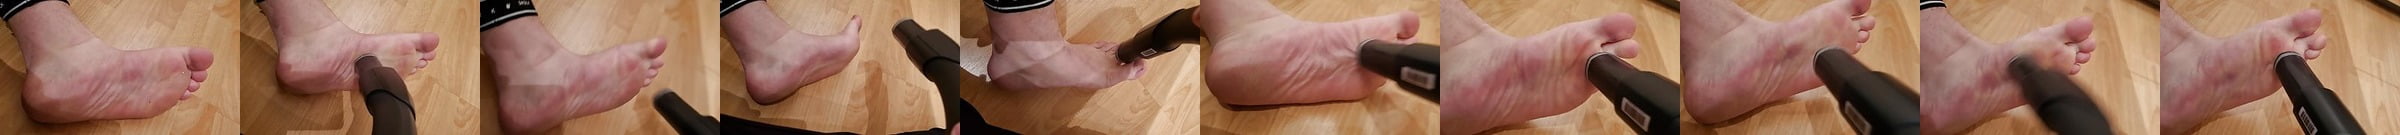 Boy Vacuuming Socks And Feet Powerfull HD Videos Porn 9f XHamster